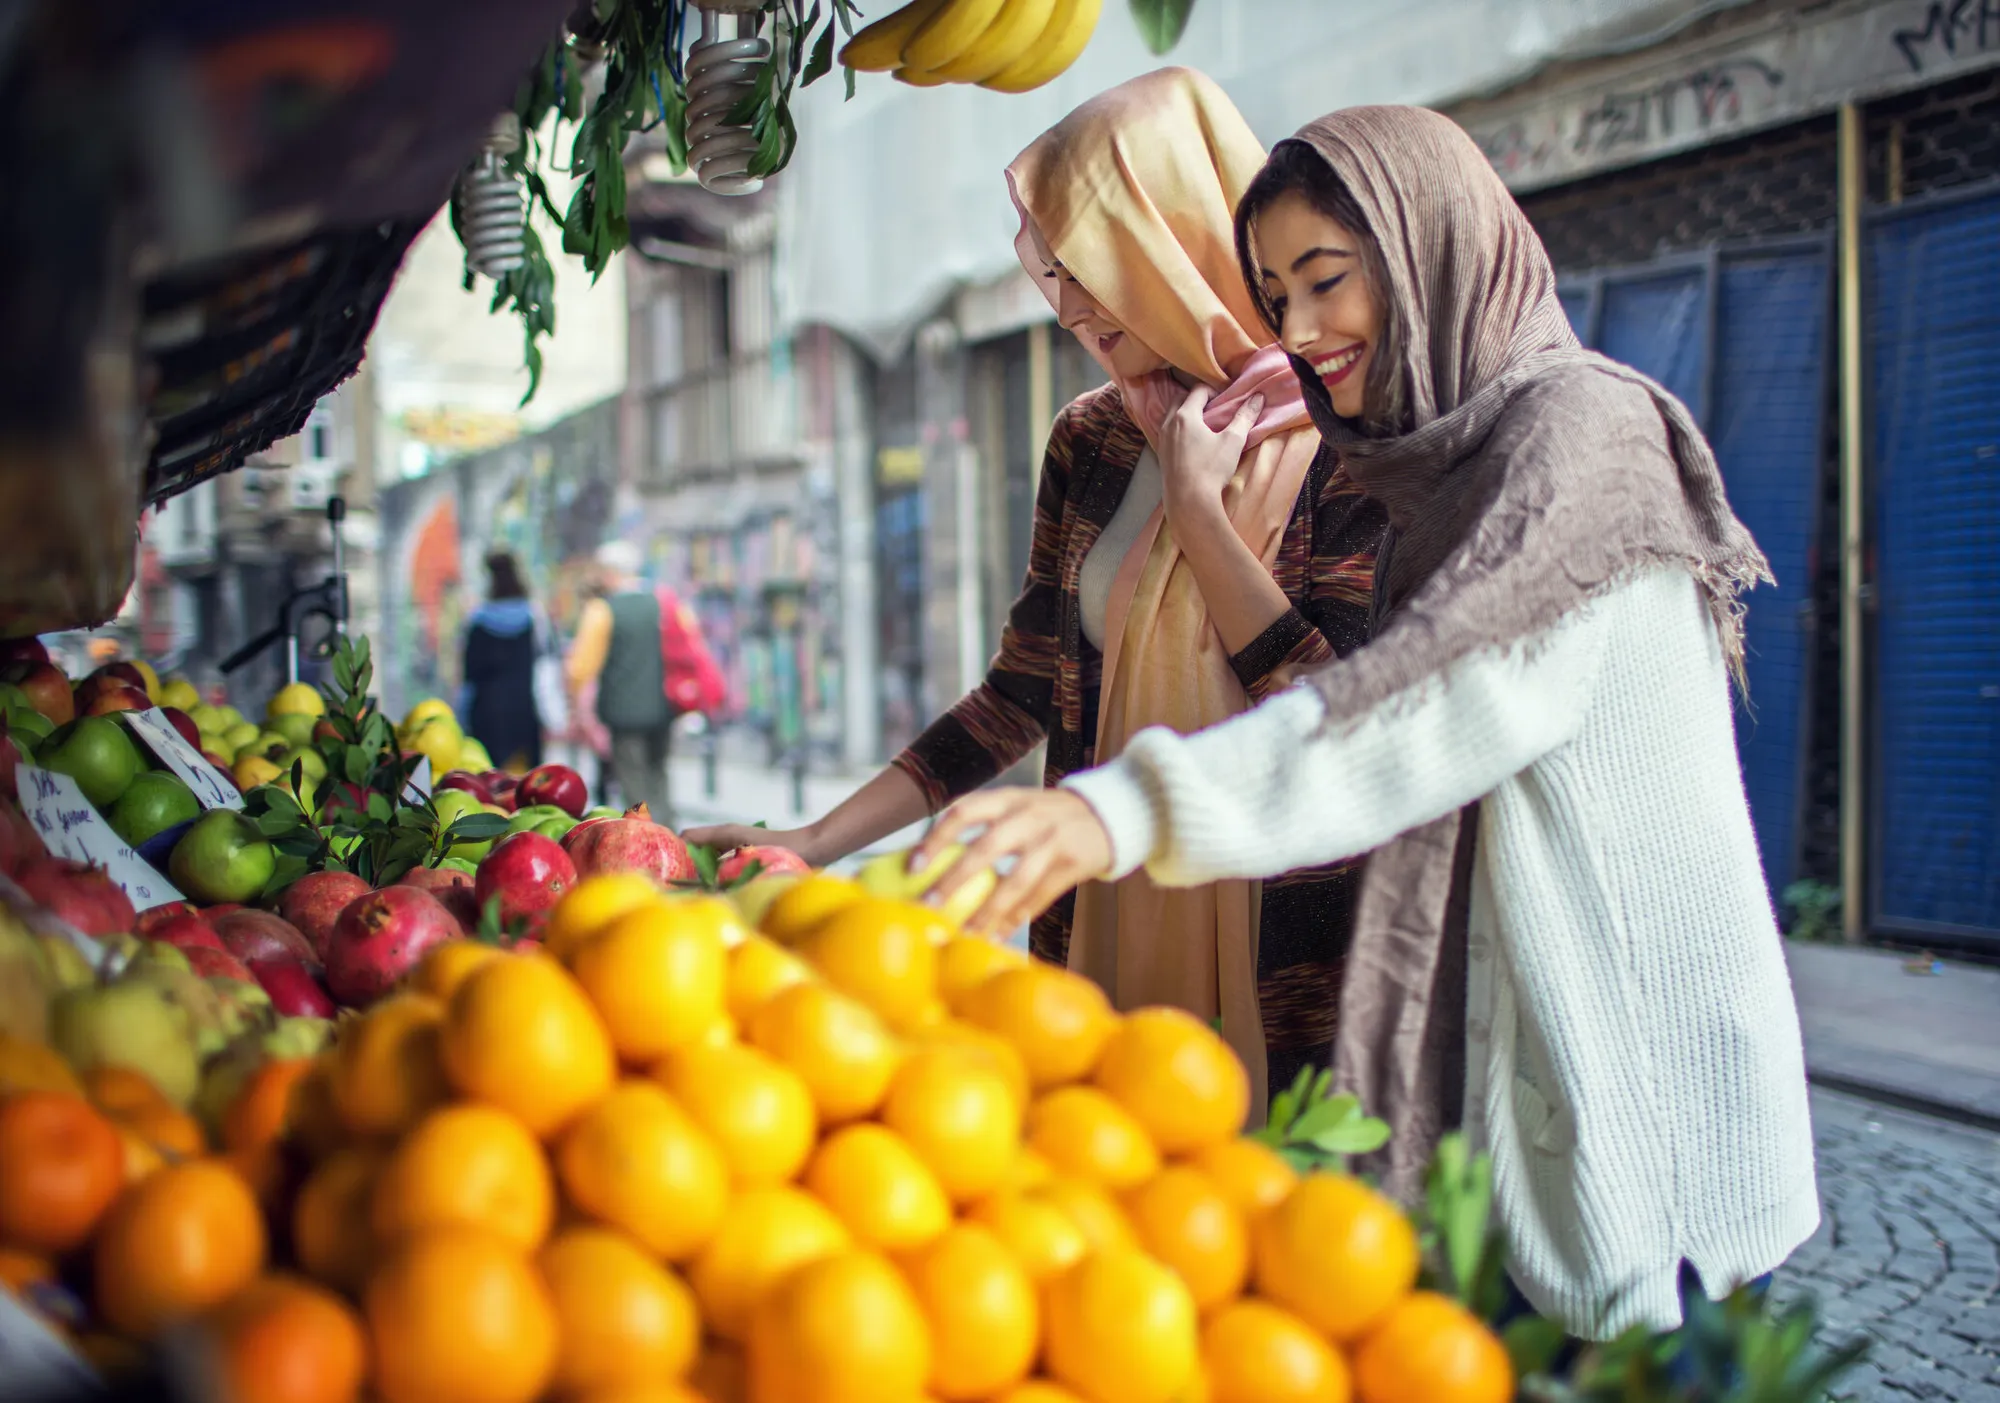 Turkish Supermarkets and Farmers Markets